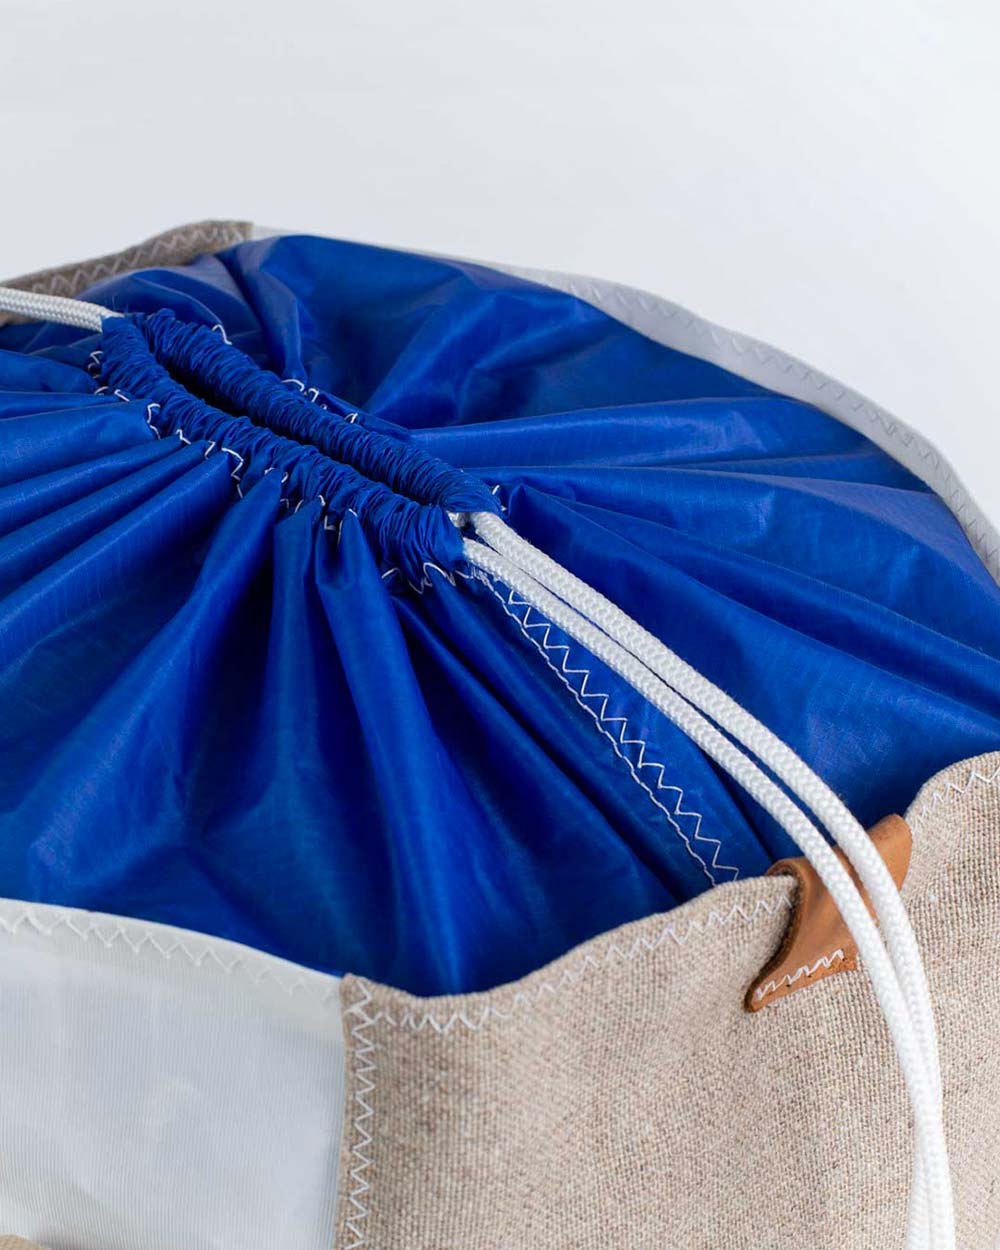 Damen Handtasche "Bucket Bag" by 727 Sailbags / Segeltuch weiß / Leinen / Boden leder